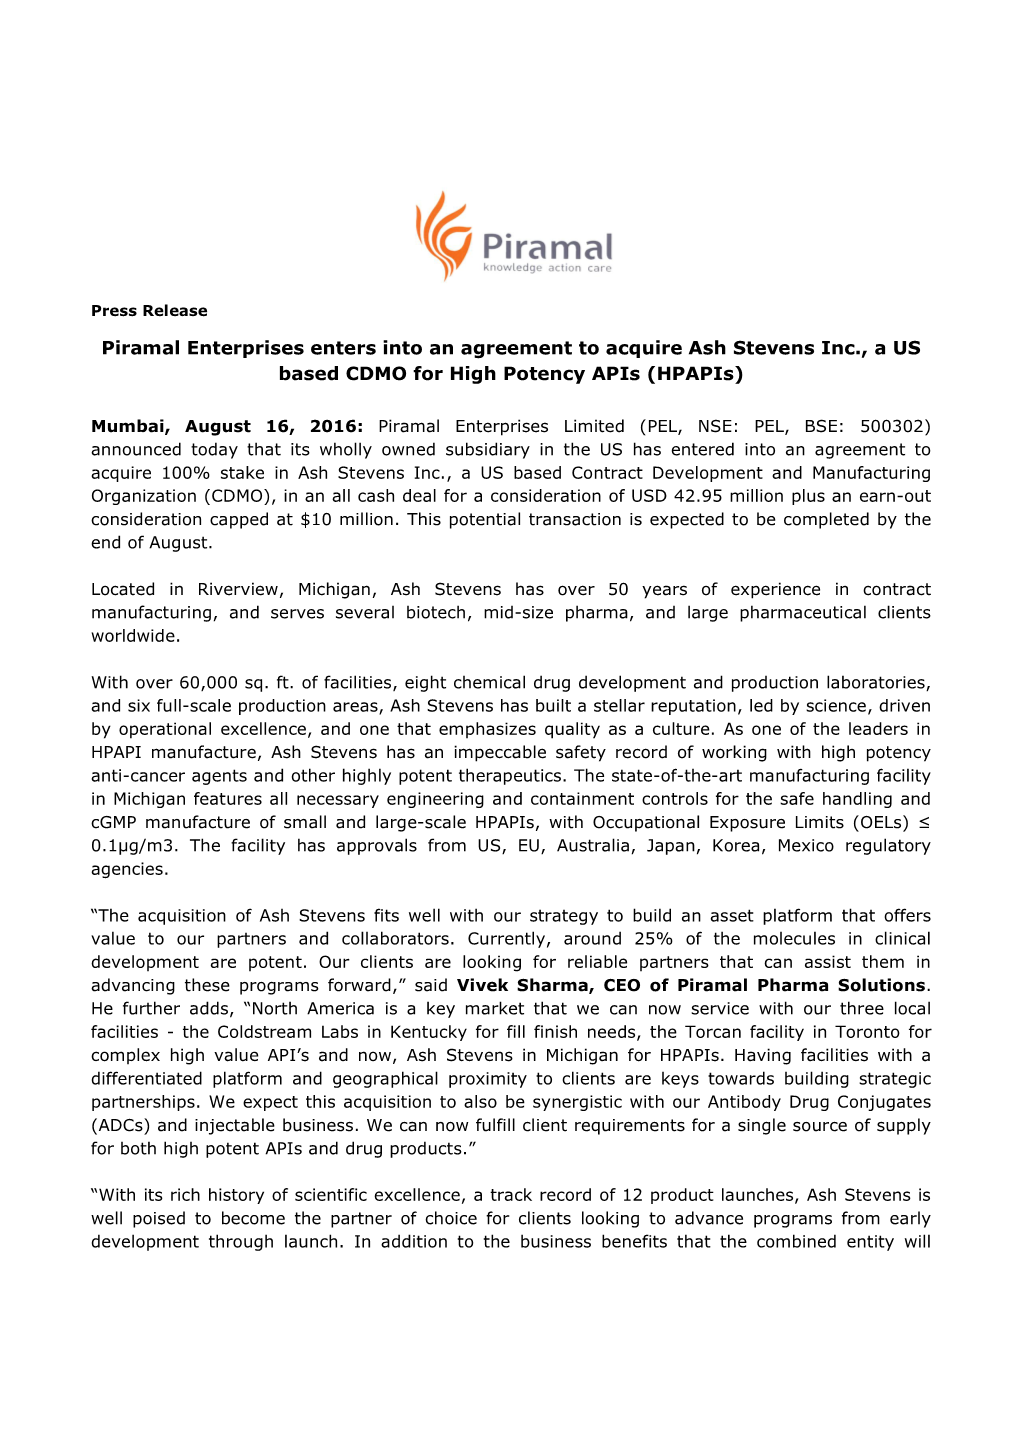 Piramal Enterprises Enters Into an Agreement to Acquire Ash Stevens Inc., a US Based CDMO for High Potency Apis (Hpapis)